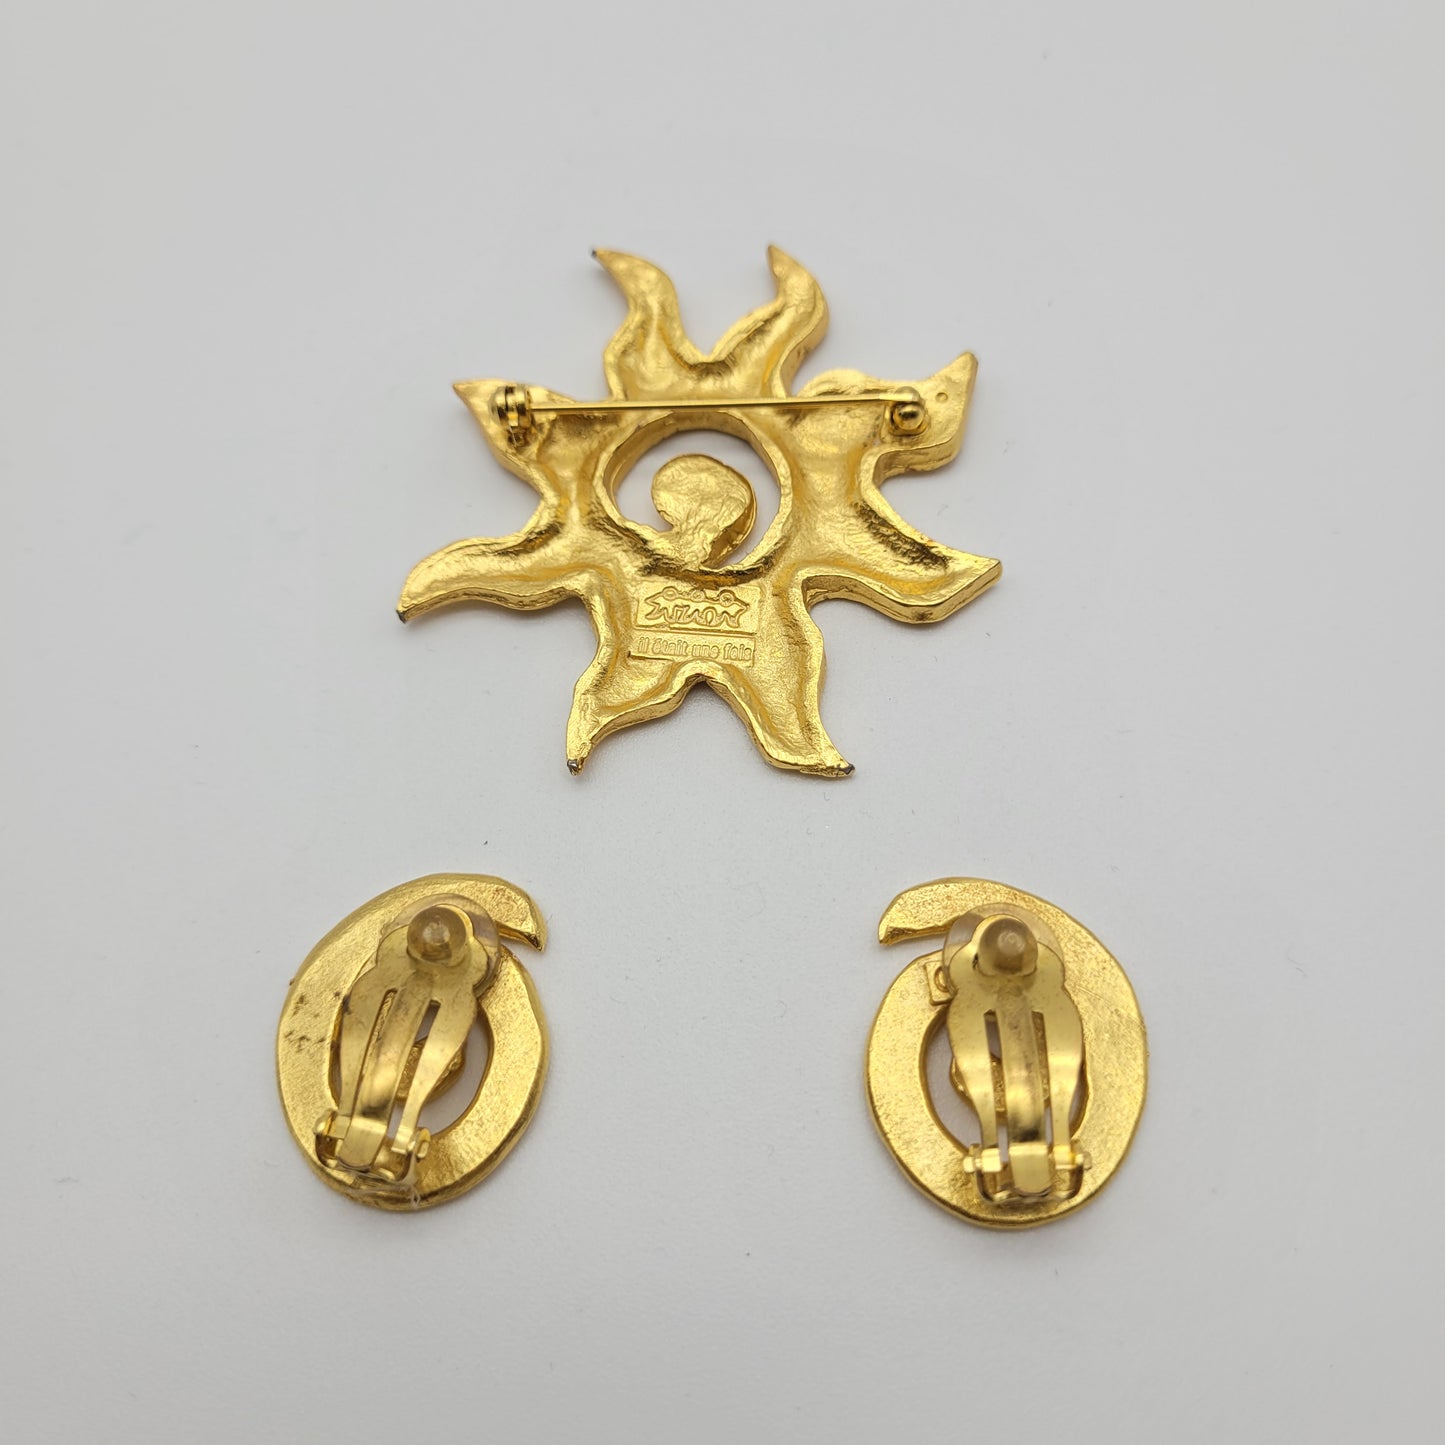 Vintage goldtone jewelry set